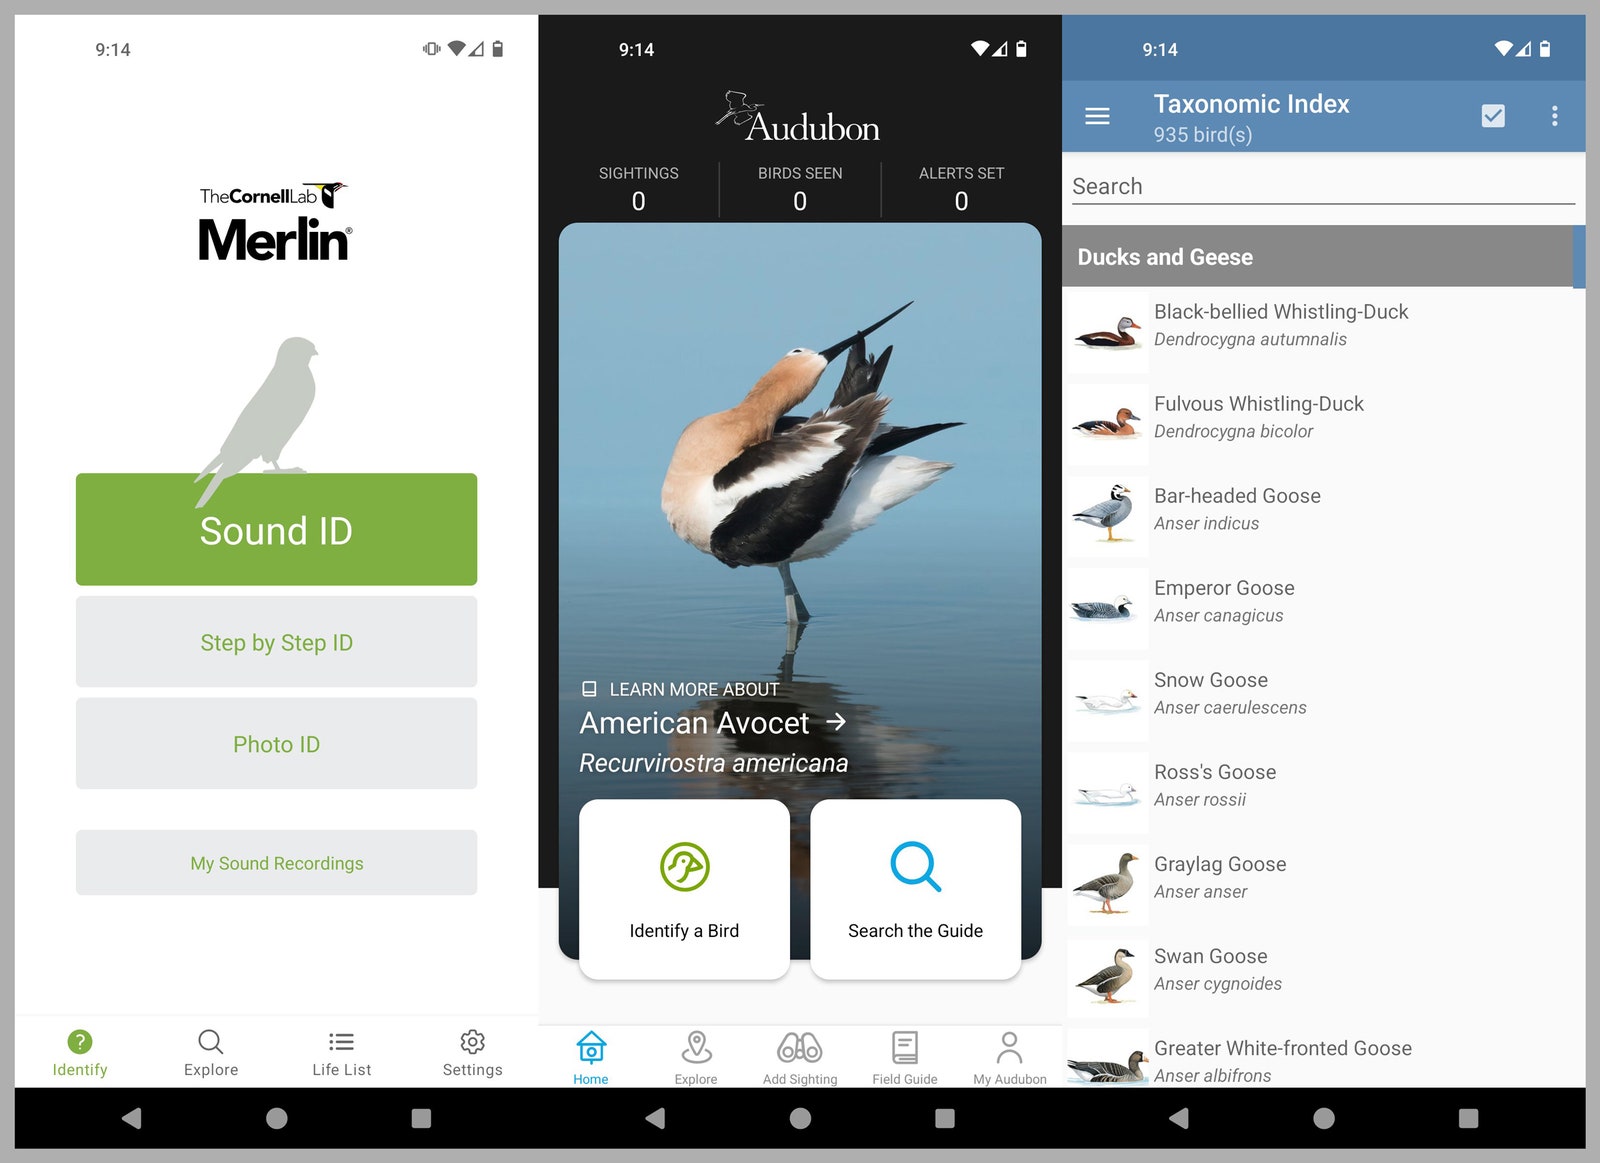 Screenshots of the Merlin Audubon and Taxonomic Index bird watching apps